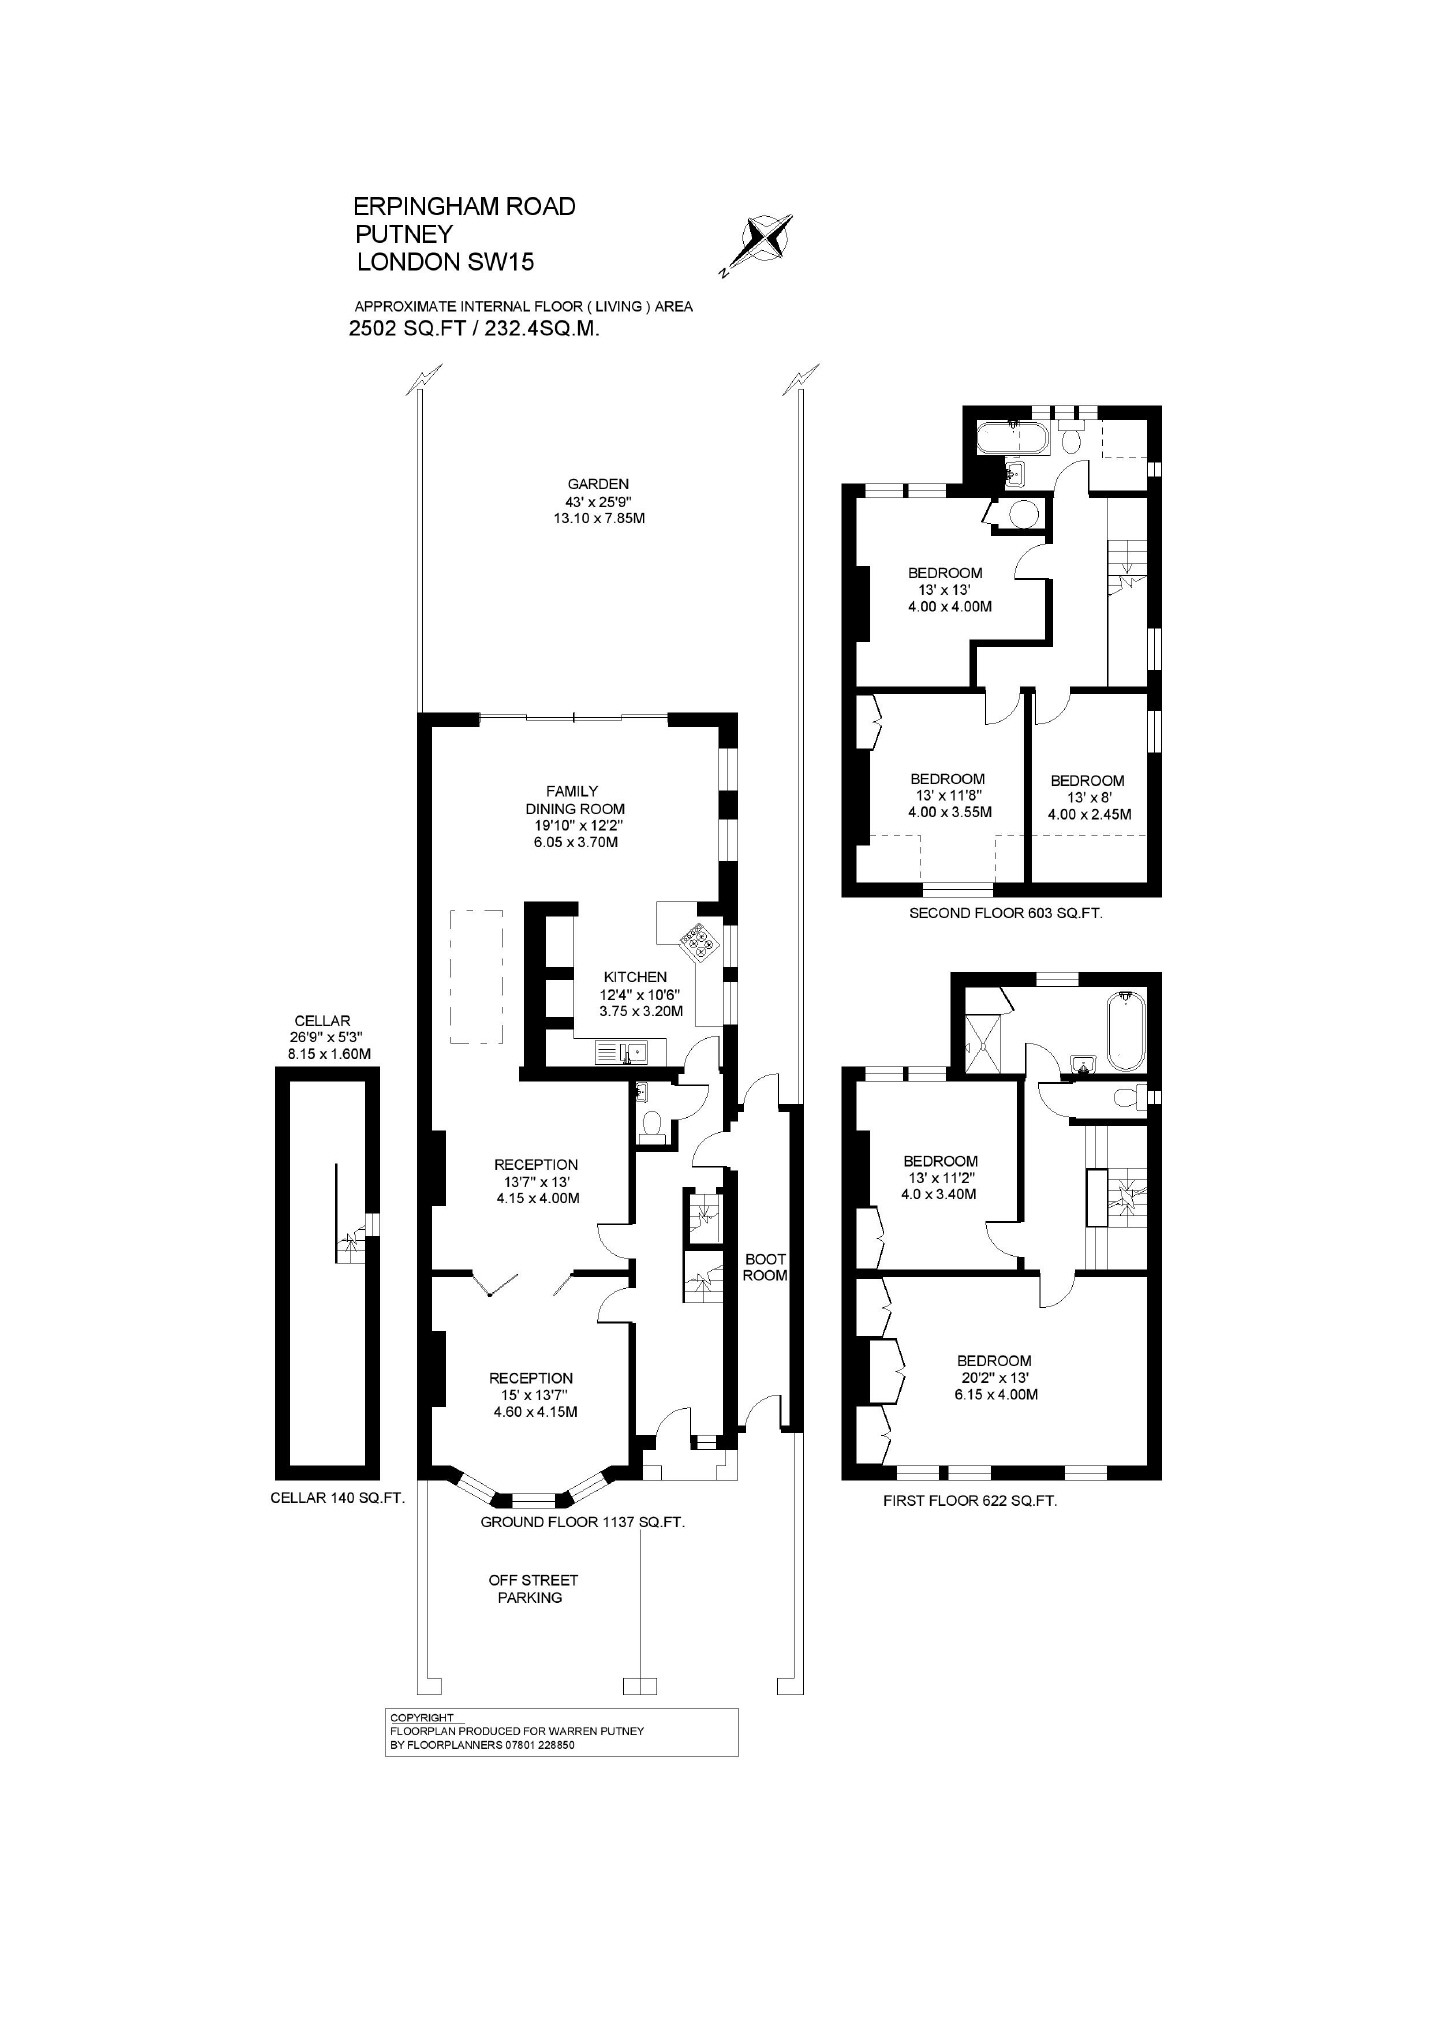 5 Bedrooms Semi-detached house for sale in Erpingham Road, Putney SW15